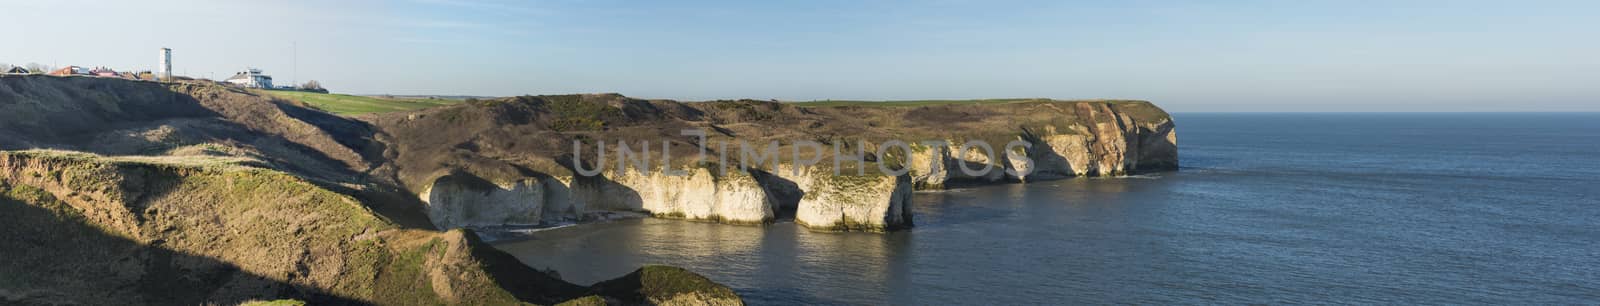 Landscape coastal scene of large chalks cliffs coastline dropping into sea